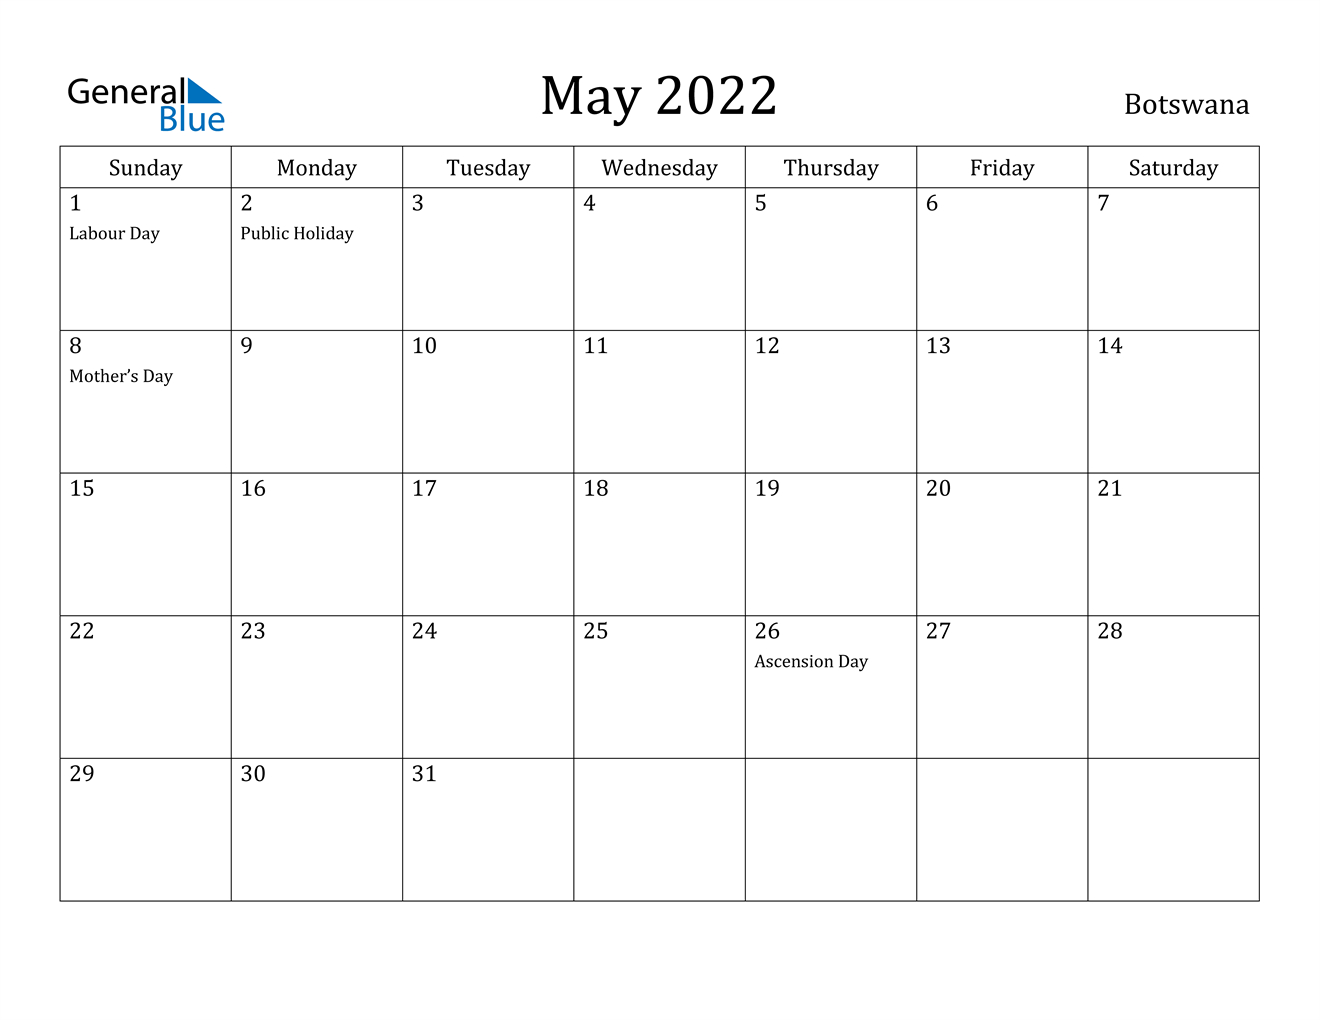 May 2022 Calendar - Botswana